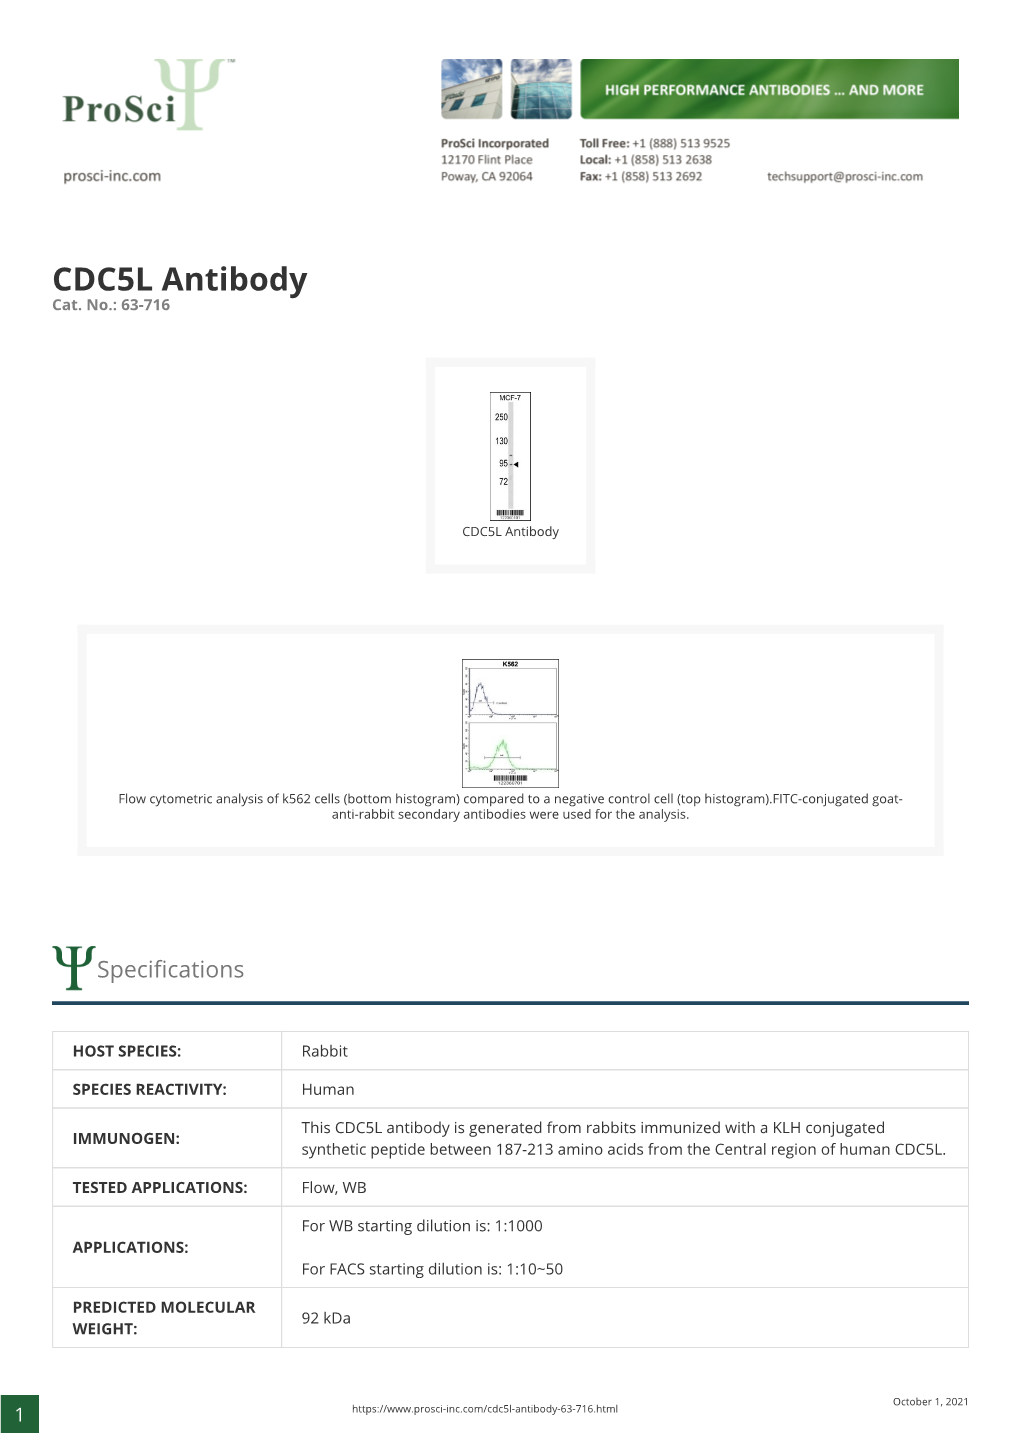 CDC5L Antibody Cat